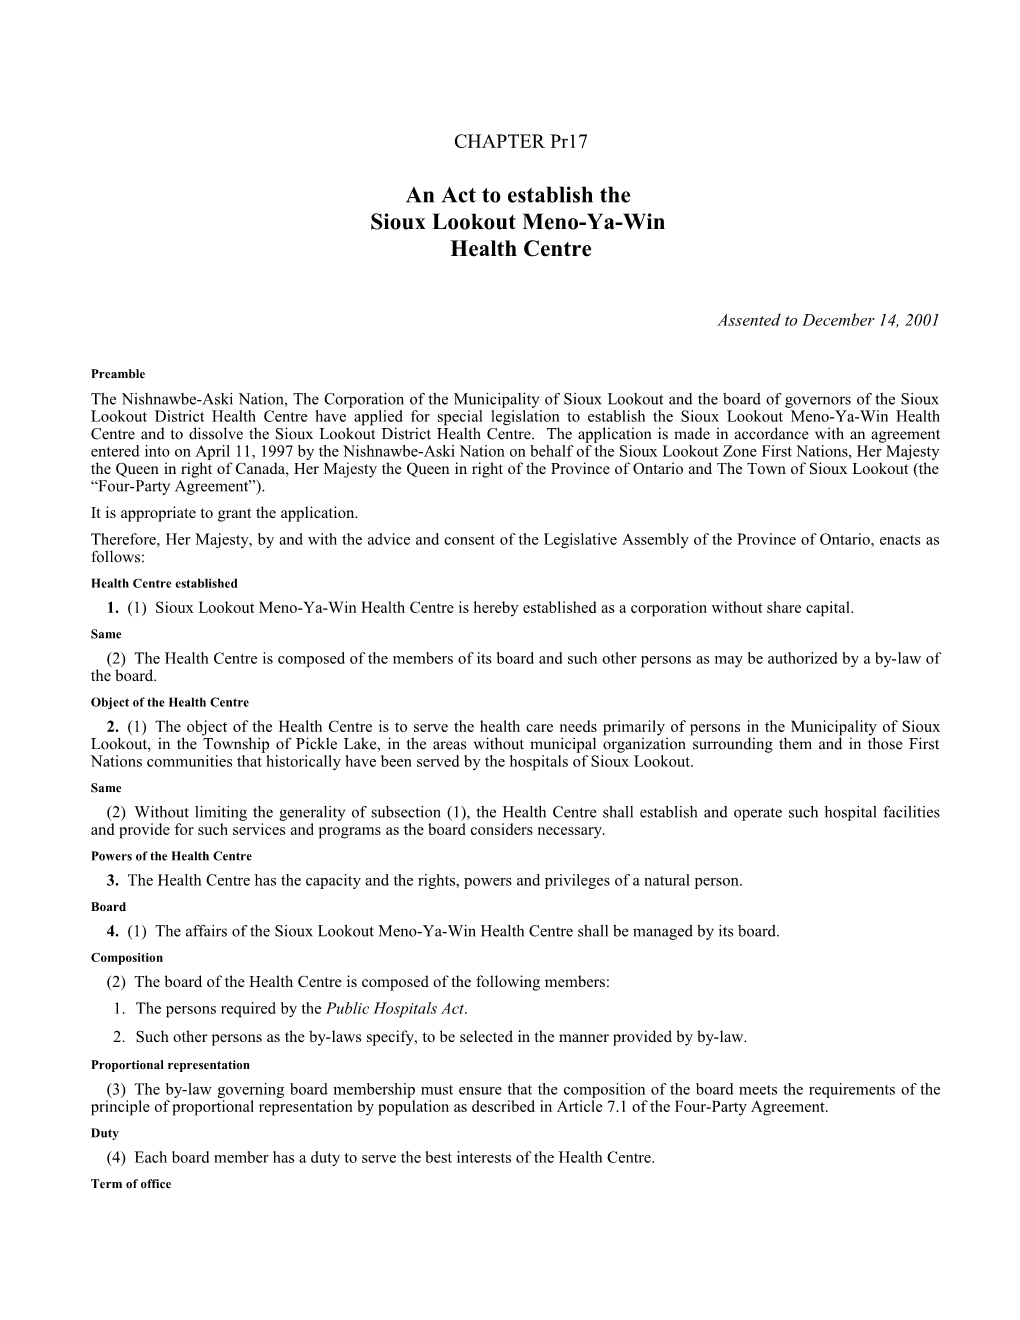 Sioux Lookout Meno-Ya-Win Health Centre Act, 2001 - Chap. Pr17 (Bill Pr15)